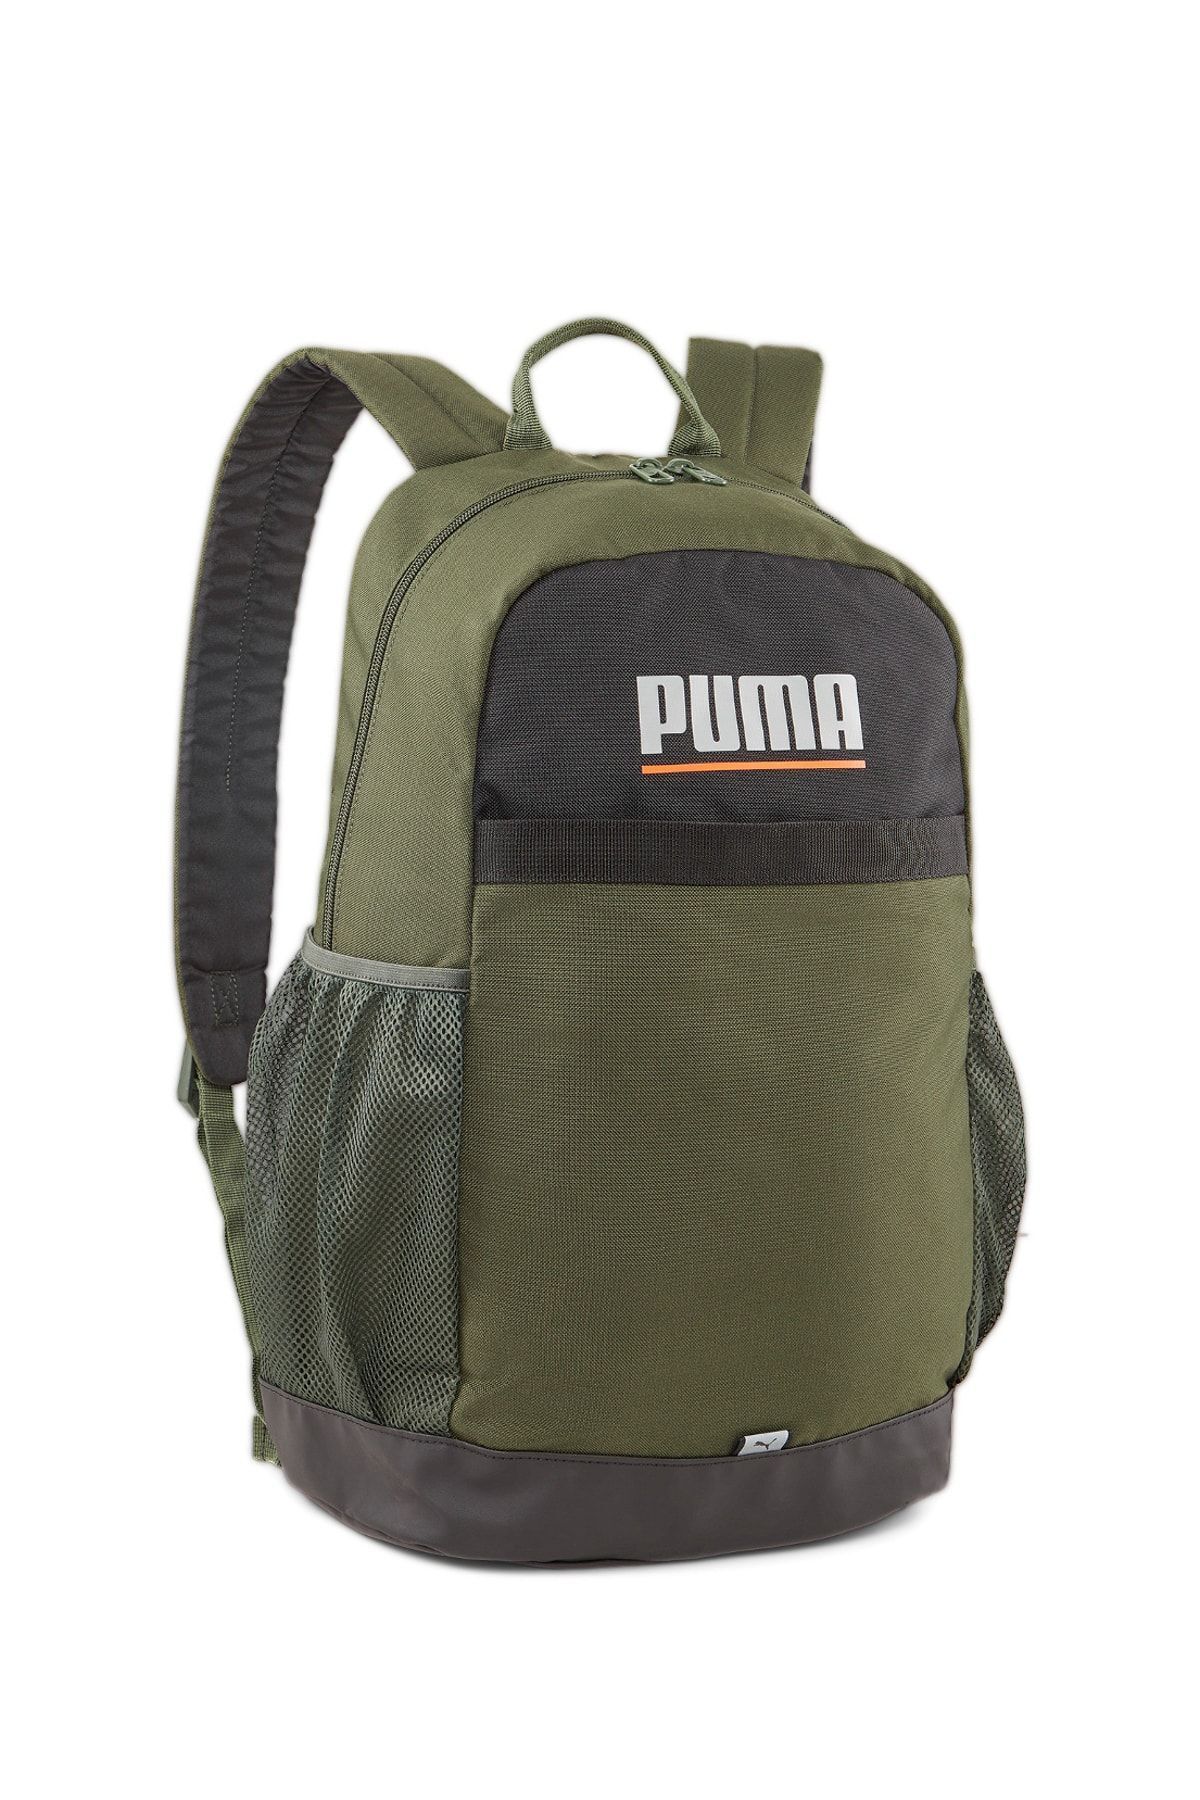 Puma 79615 Backpack Unisex